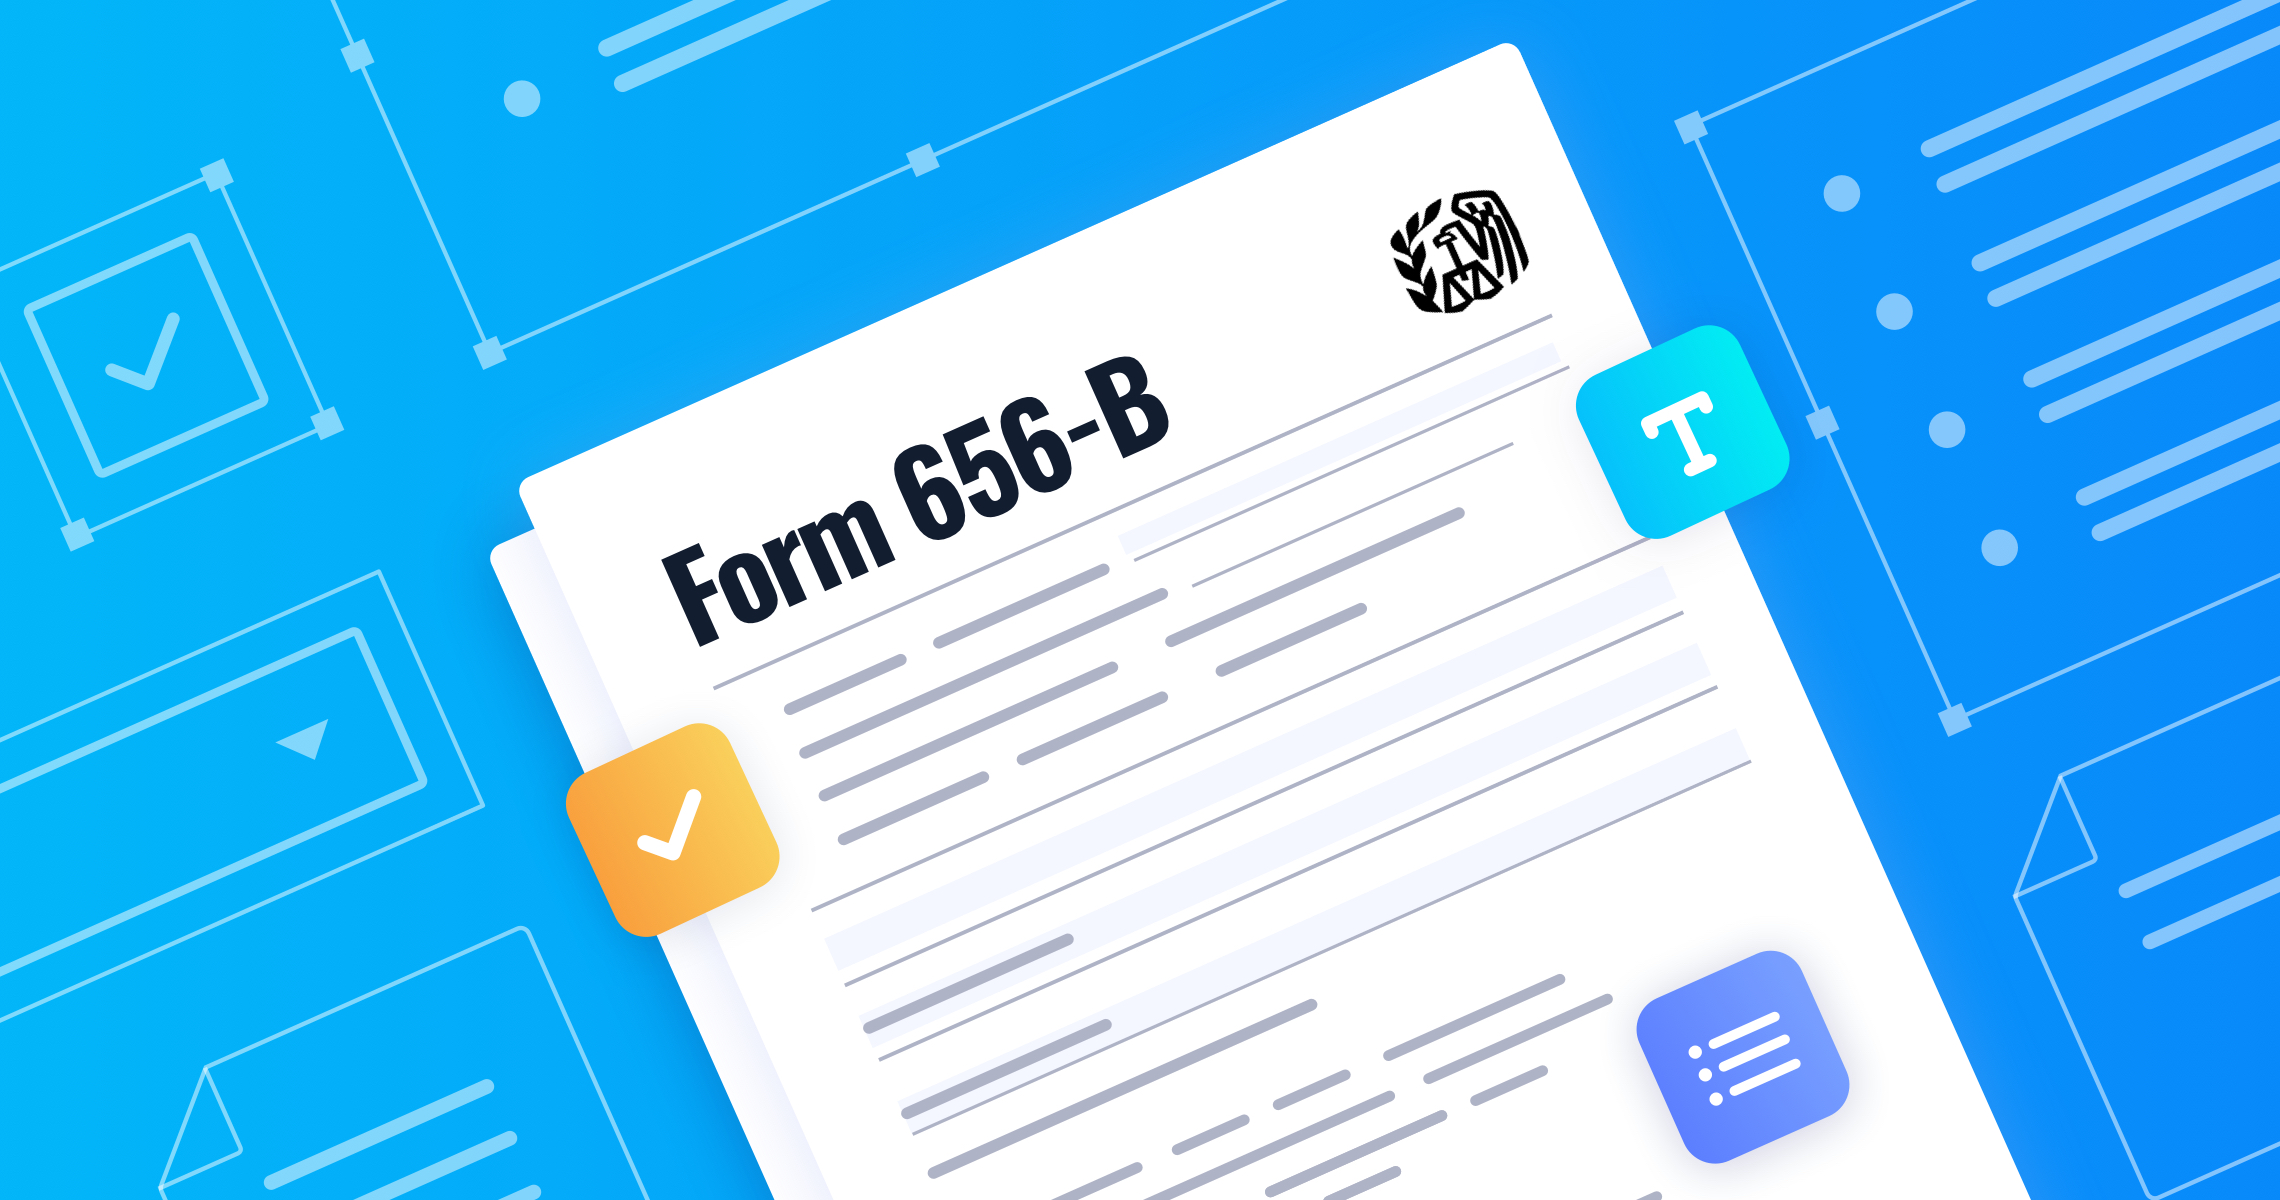 Form 656-B